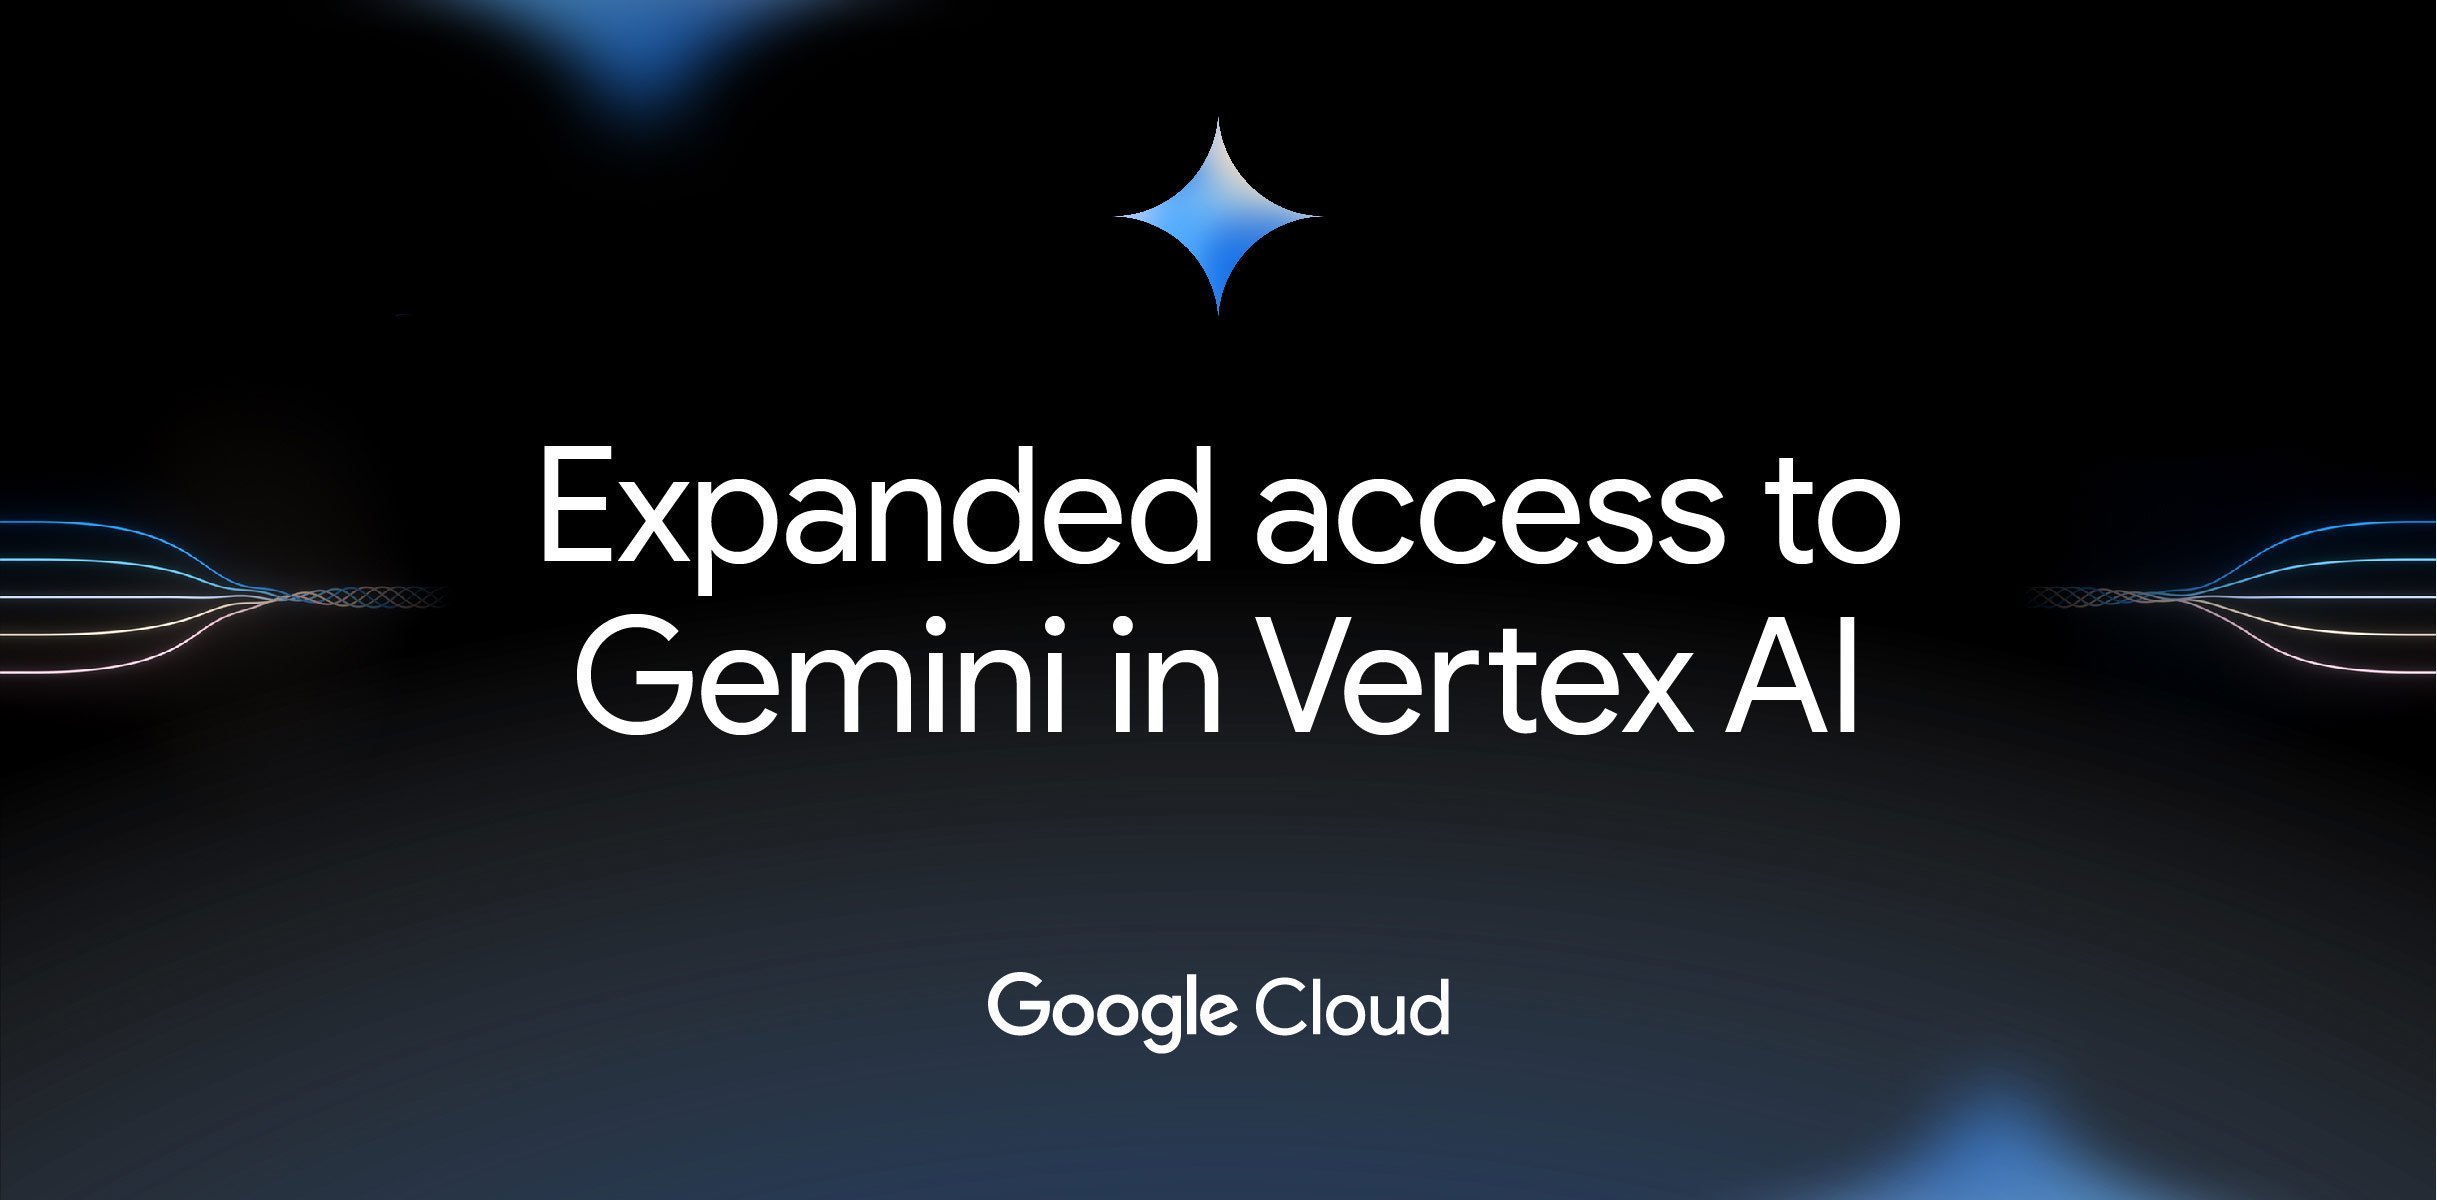 Google Cloud expands access to Gemini models for Vertex AI customers